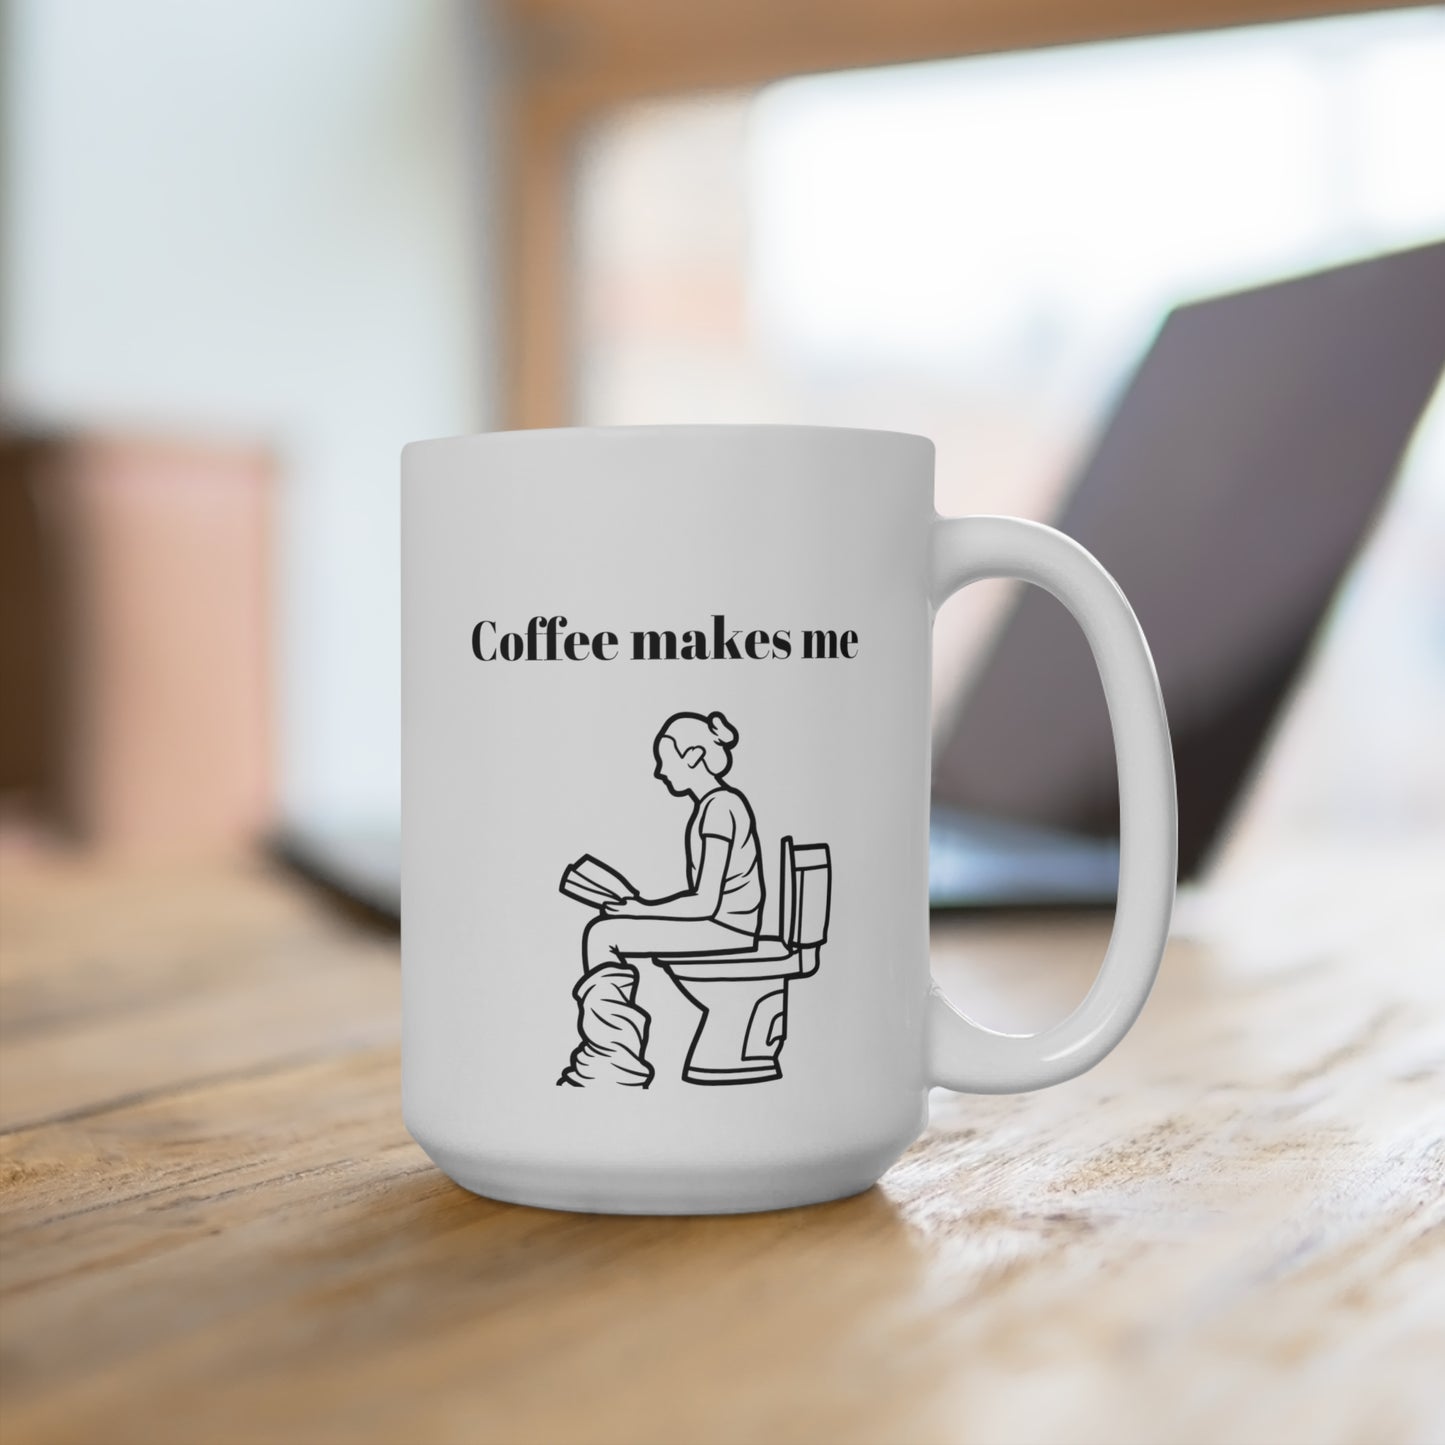 Coffee makes me BIG Ceramic Mug 15oz